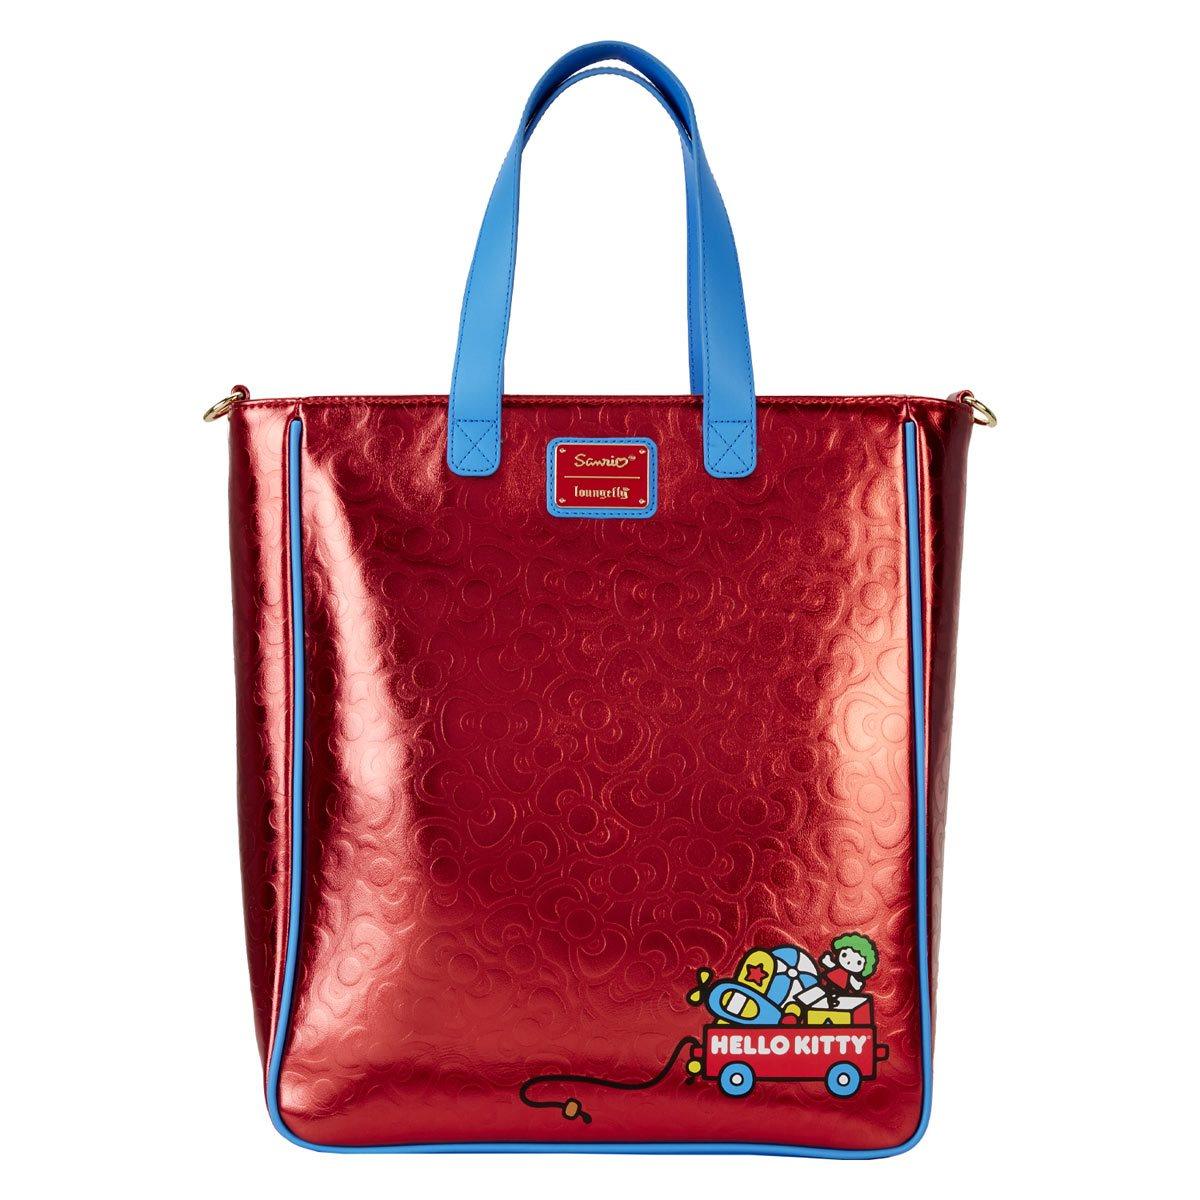 Sanrio Hello Kitty 50th Anniversary Chenille Metallic Tote Bag with Coin Bag - Bubblegum Divas 